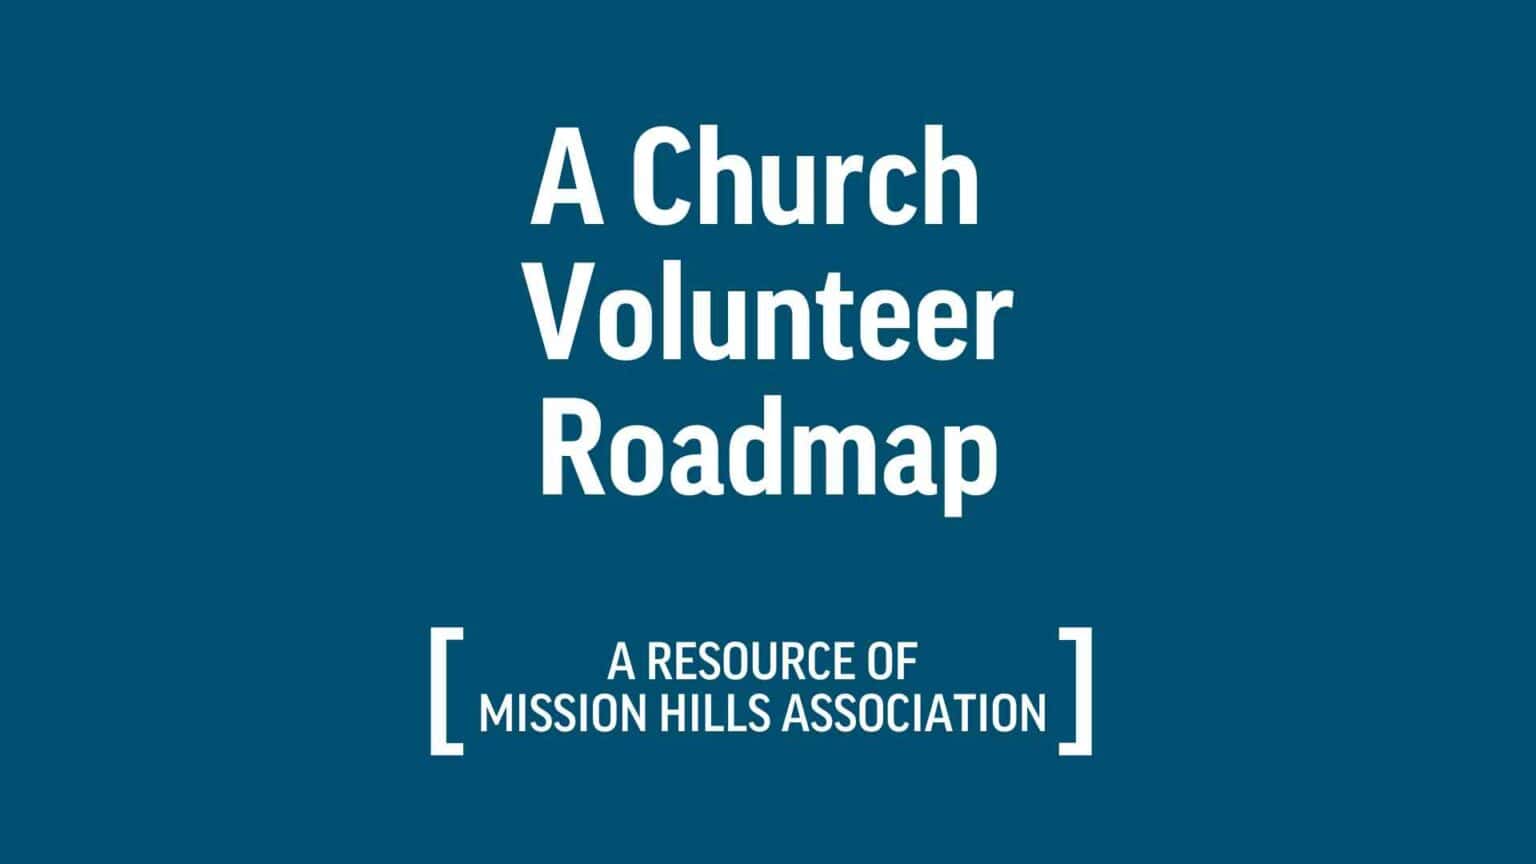 A Church Volunteer Roadmap